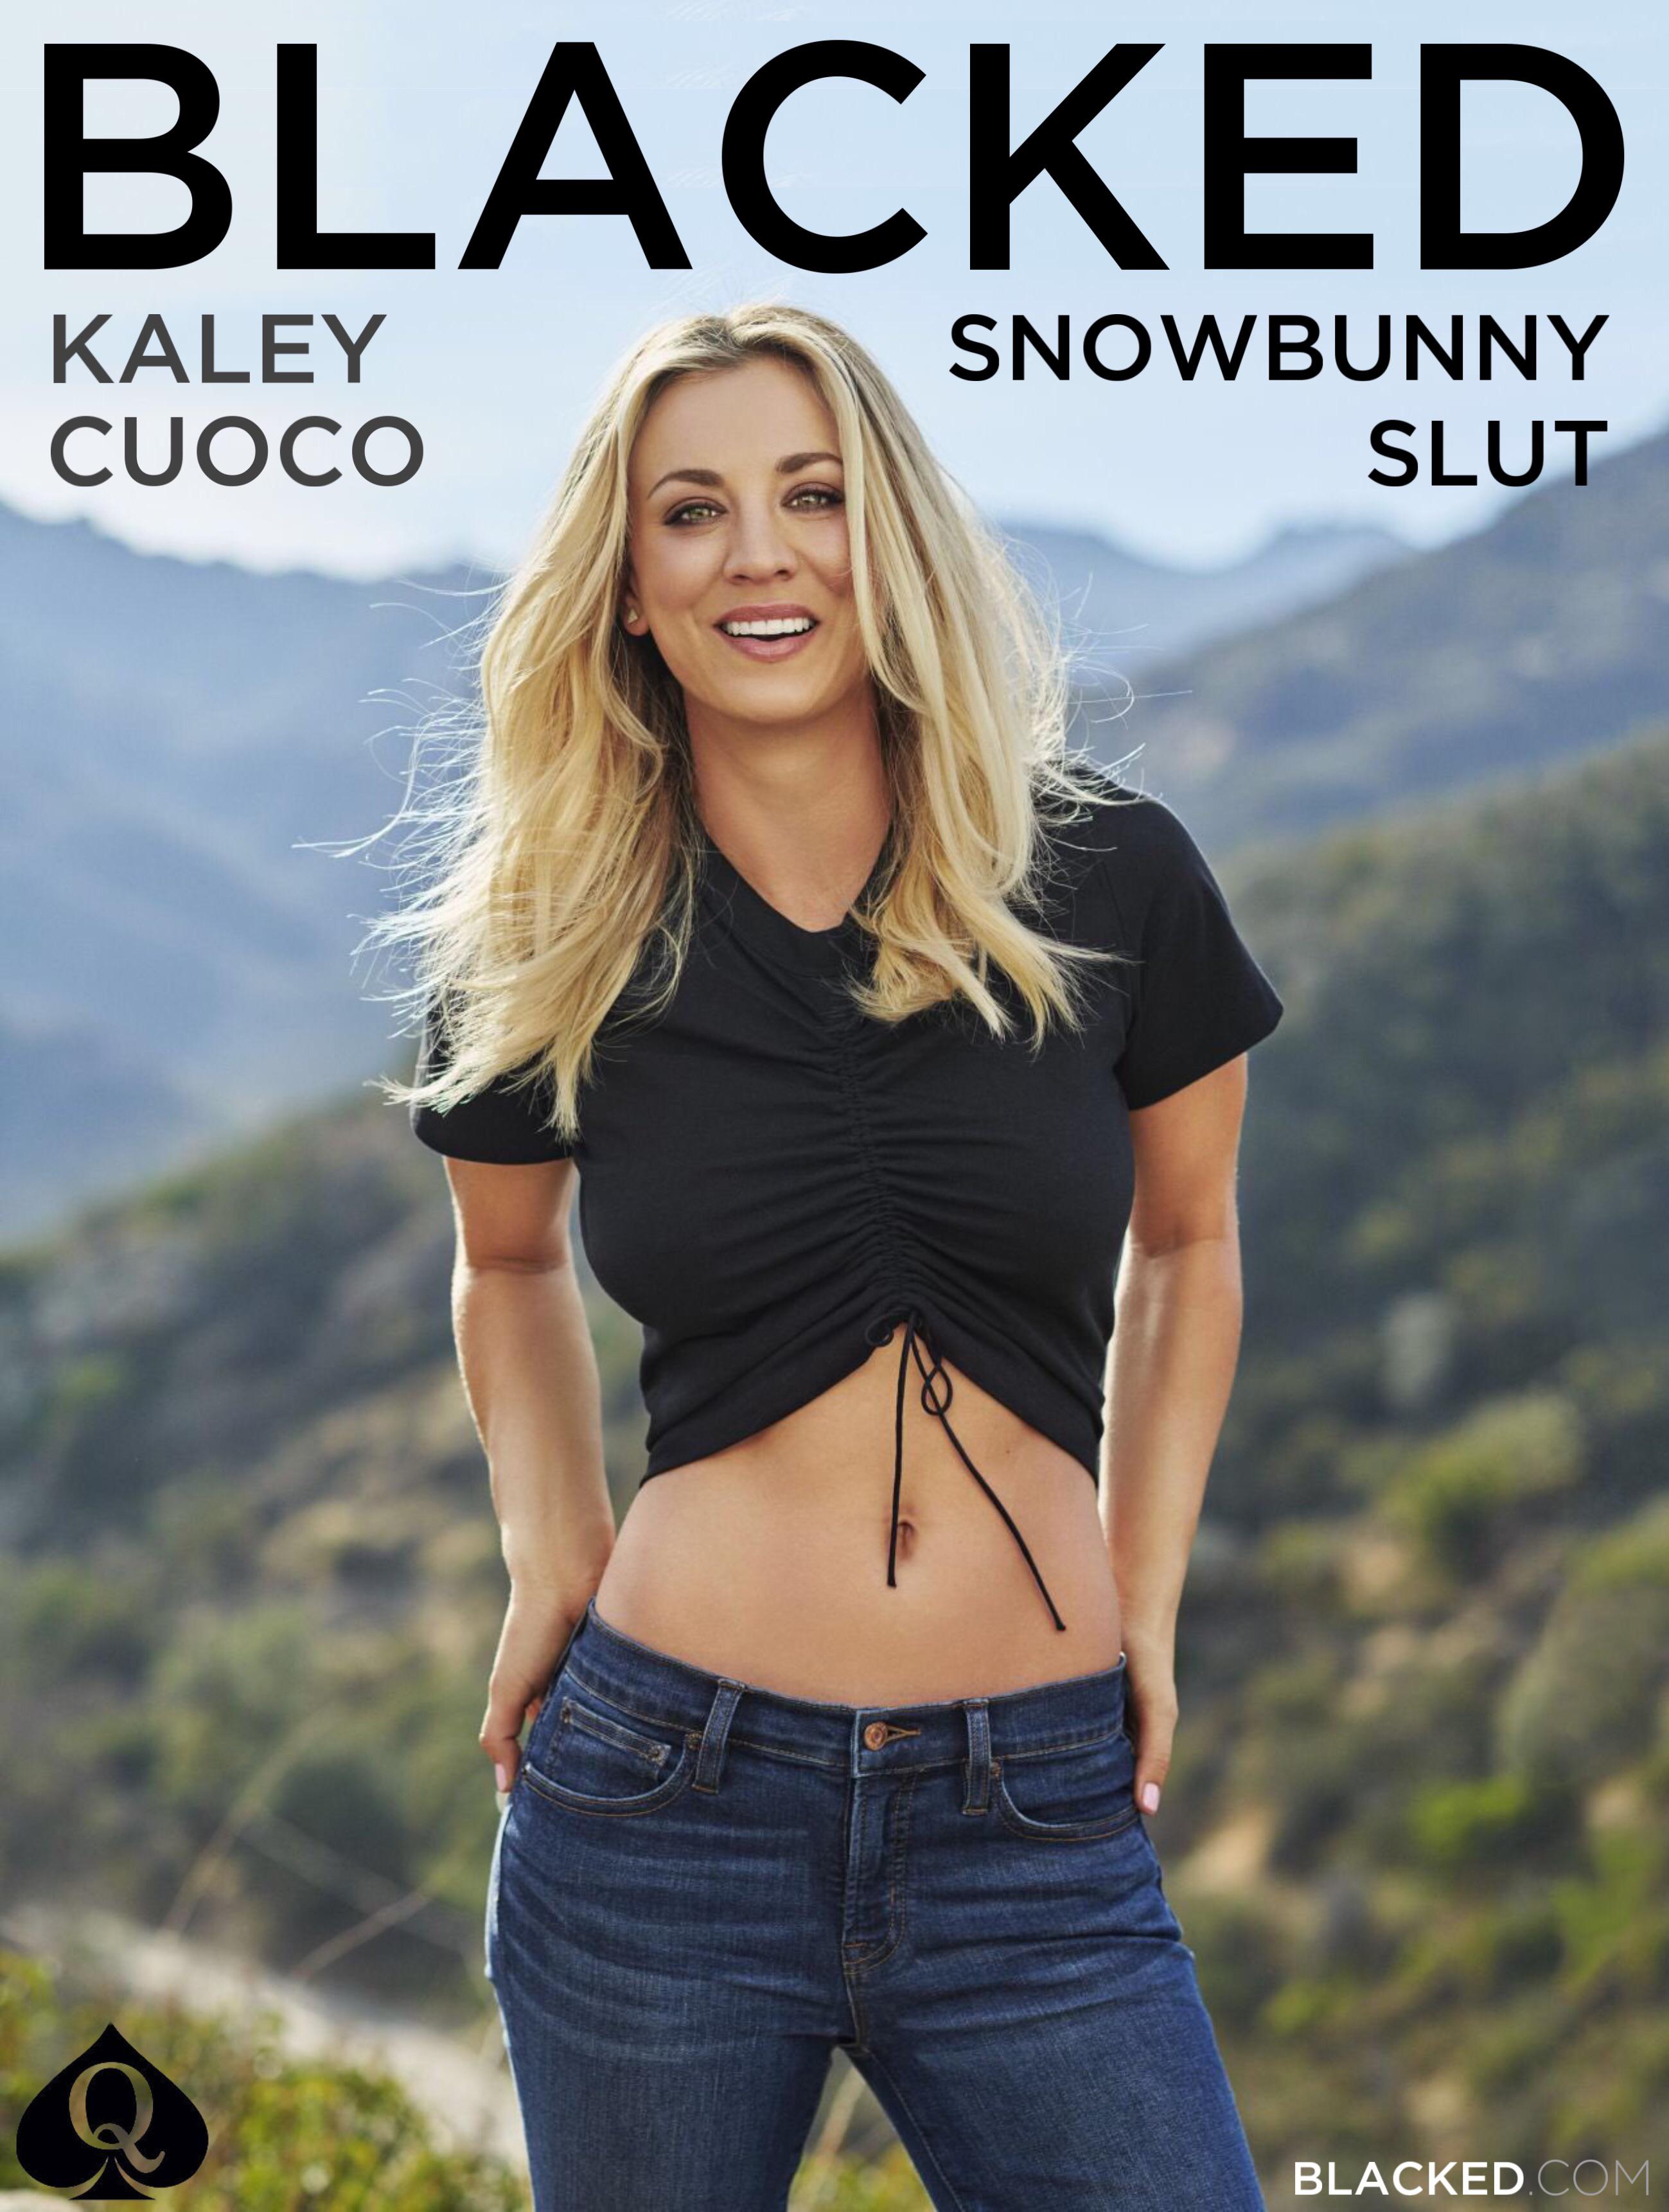 Kaley Cuoco Snowbunny On Blacked Scrolller